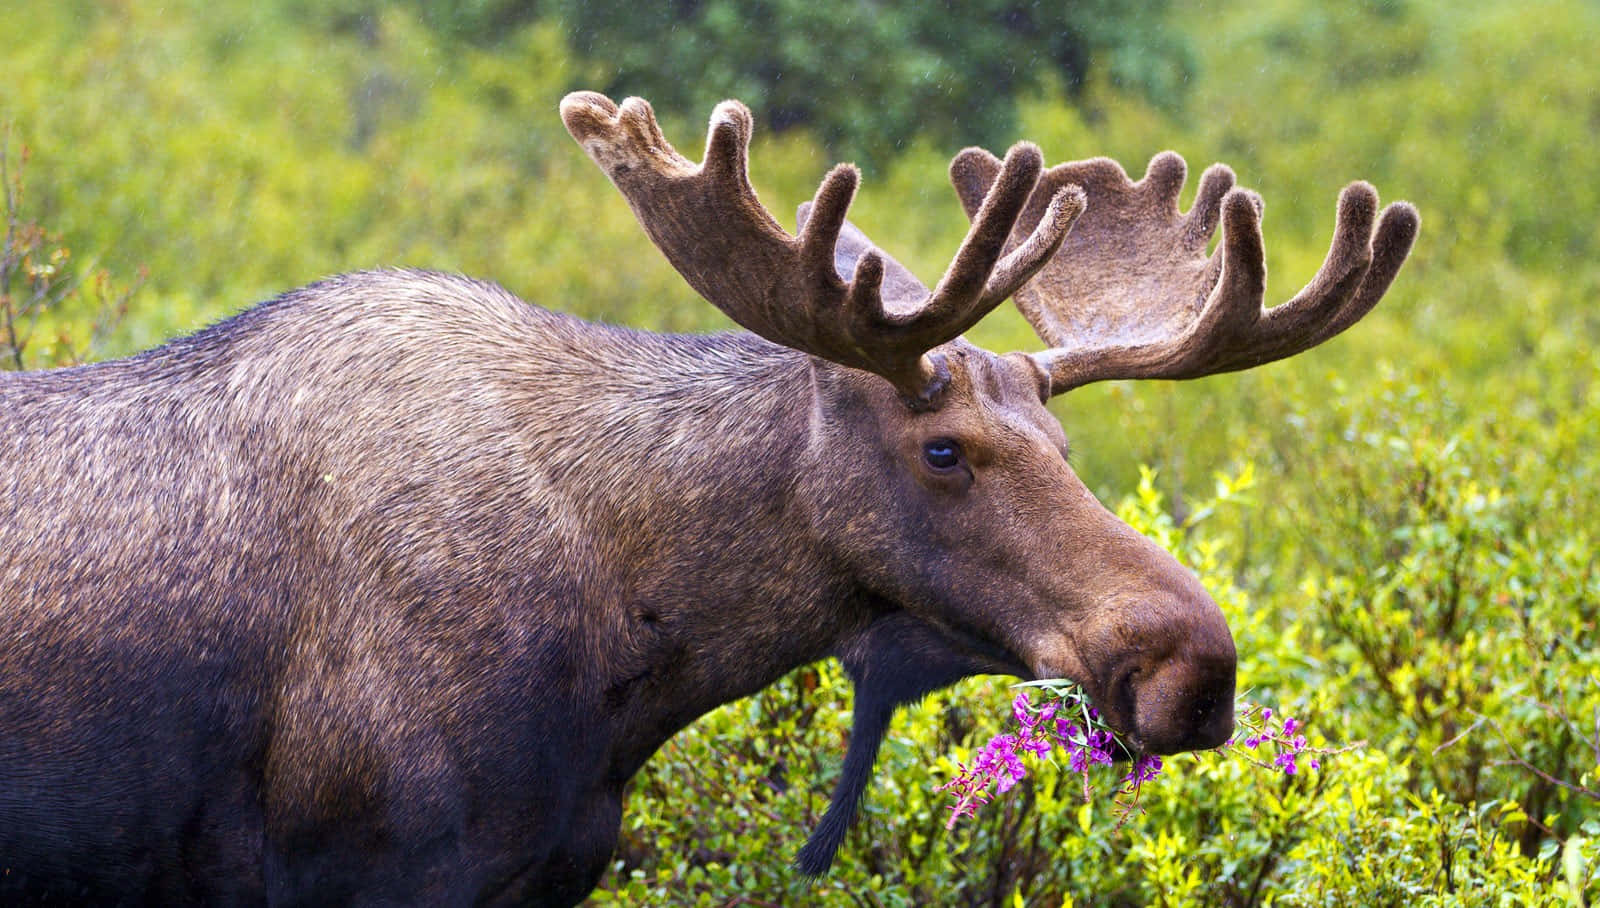 Majestic Moosein Nature.jpg Background